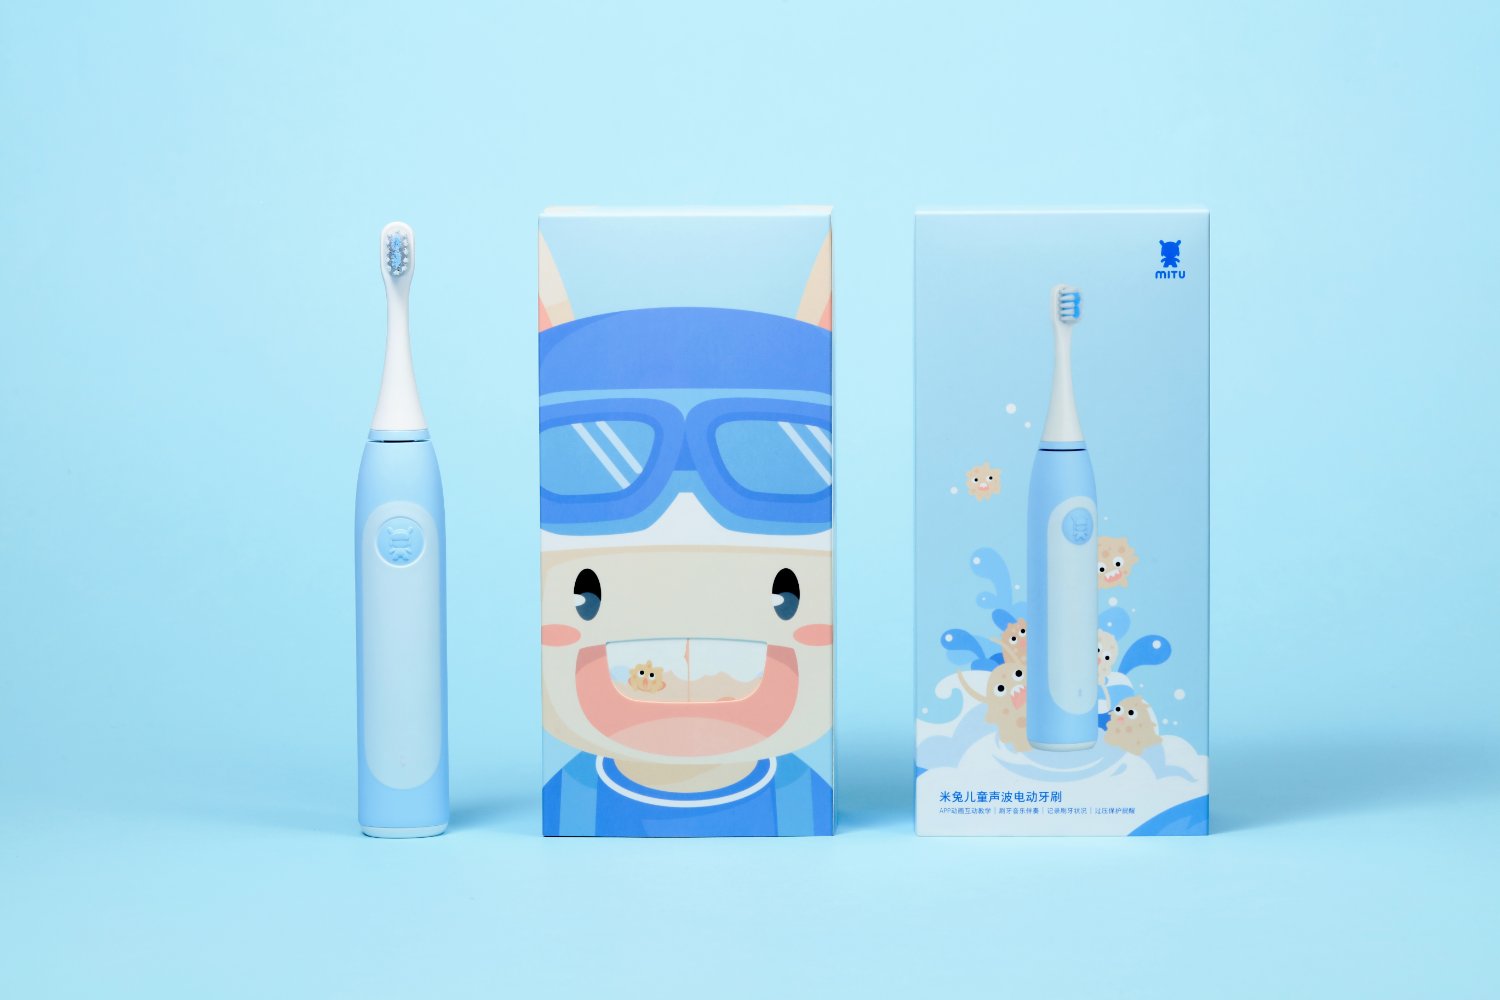 Mi Kids Sonic Toothbrush Is Designed To Help Kids Love Brushing Their Teeth